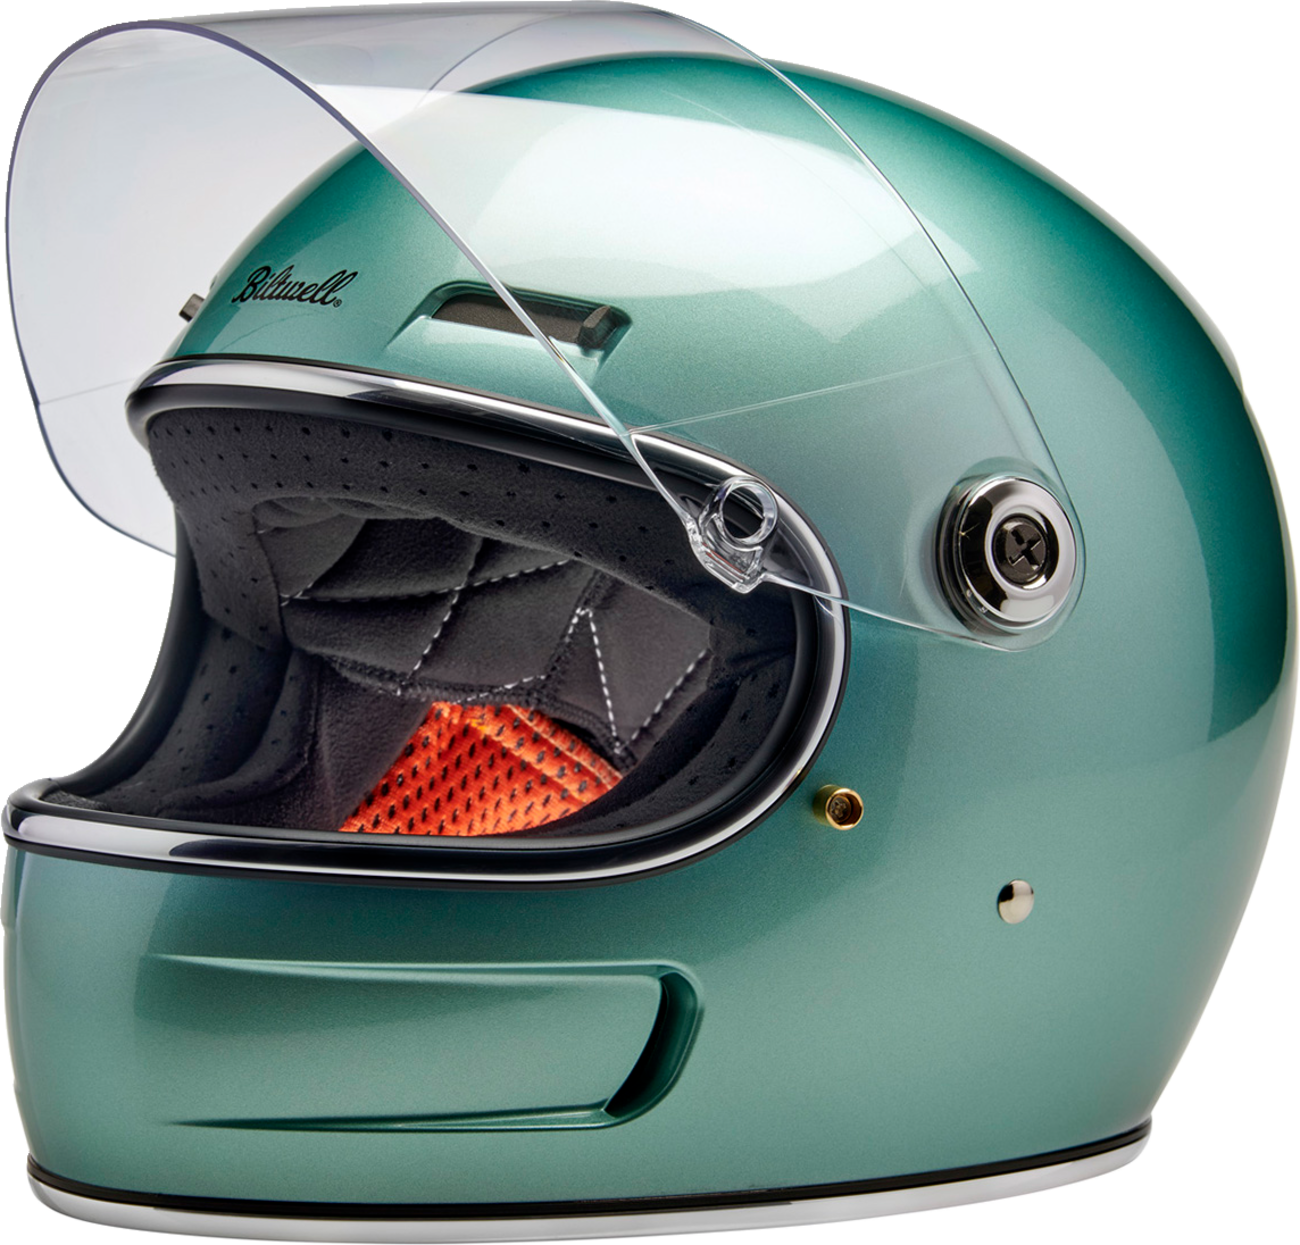 BILTWELL Gringo SV Helmet - Metallic Seafoam - Medium 1006-313-503